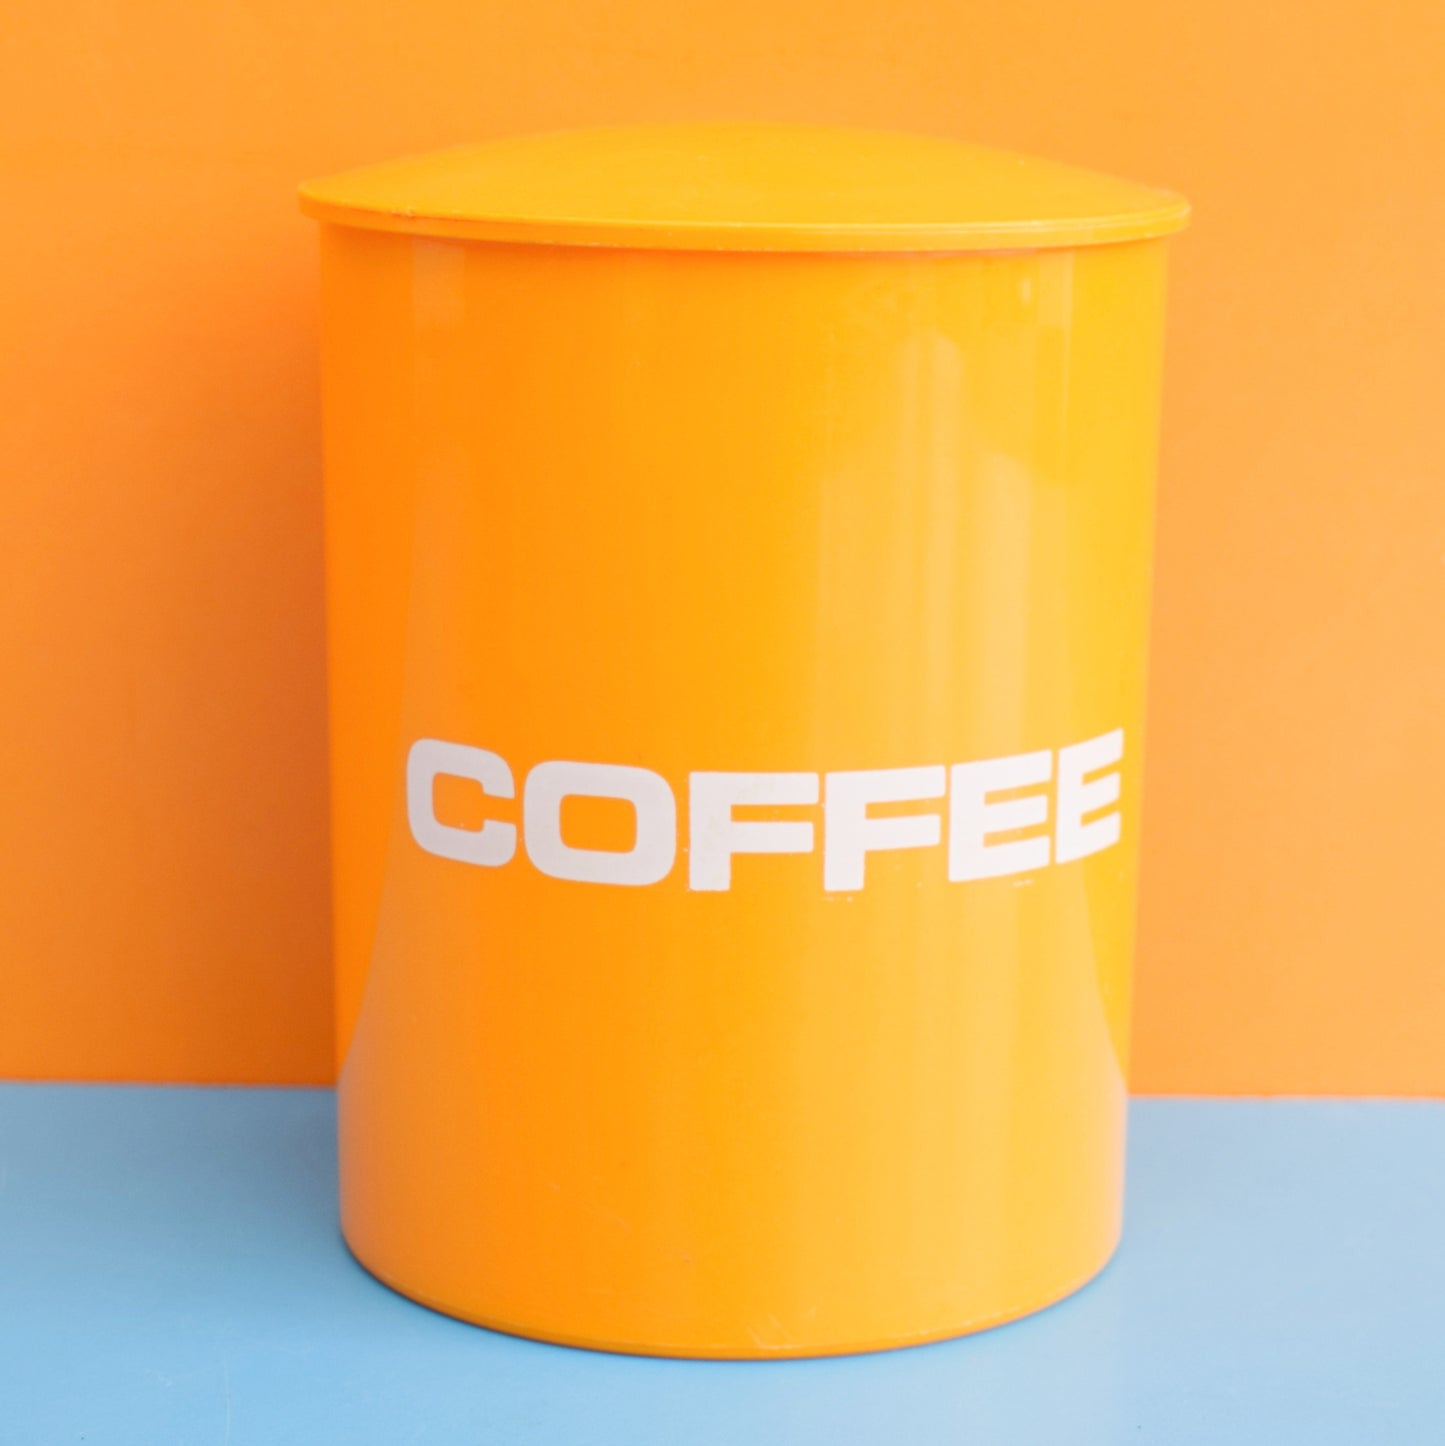 Vintage 1970s Plastic Coffee Container - Danish